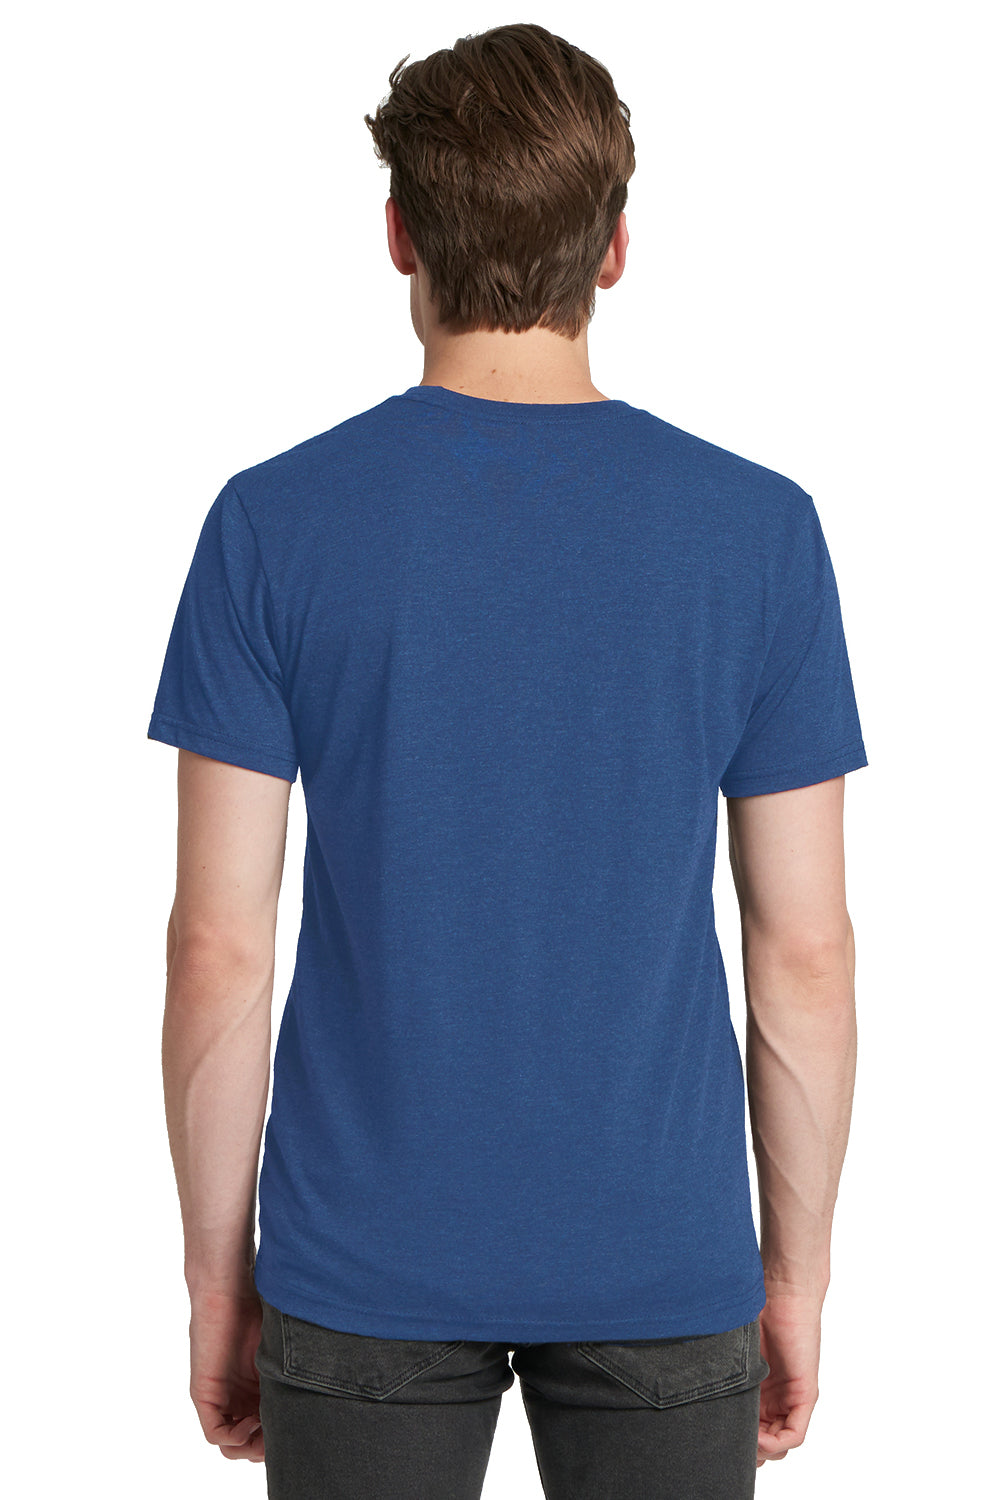 Next Level 6010 Mens Jersey Short Sleeve Crewneck T-Shirt Royal Blue Back